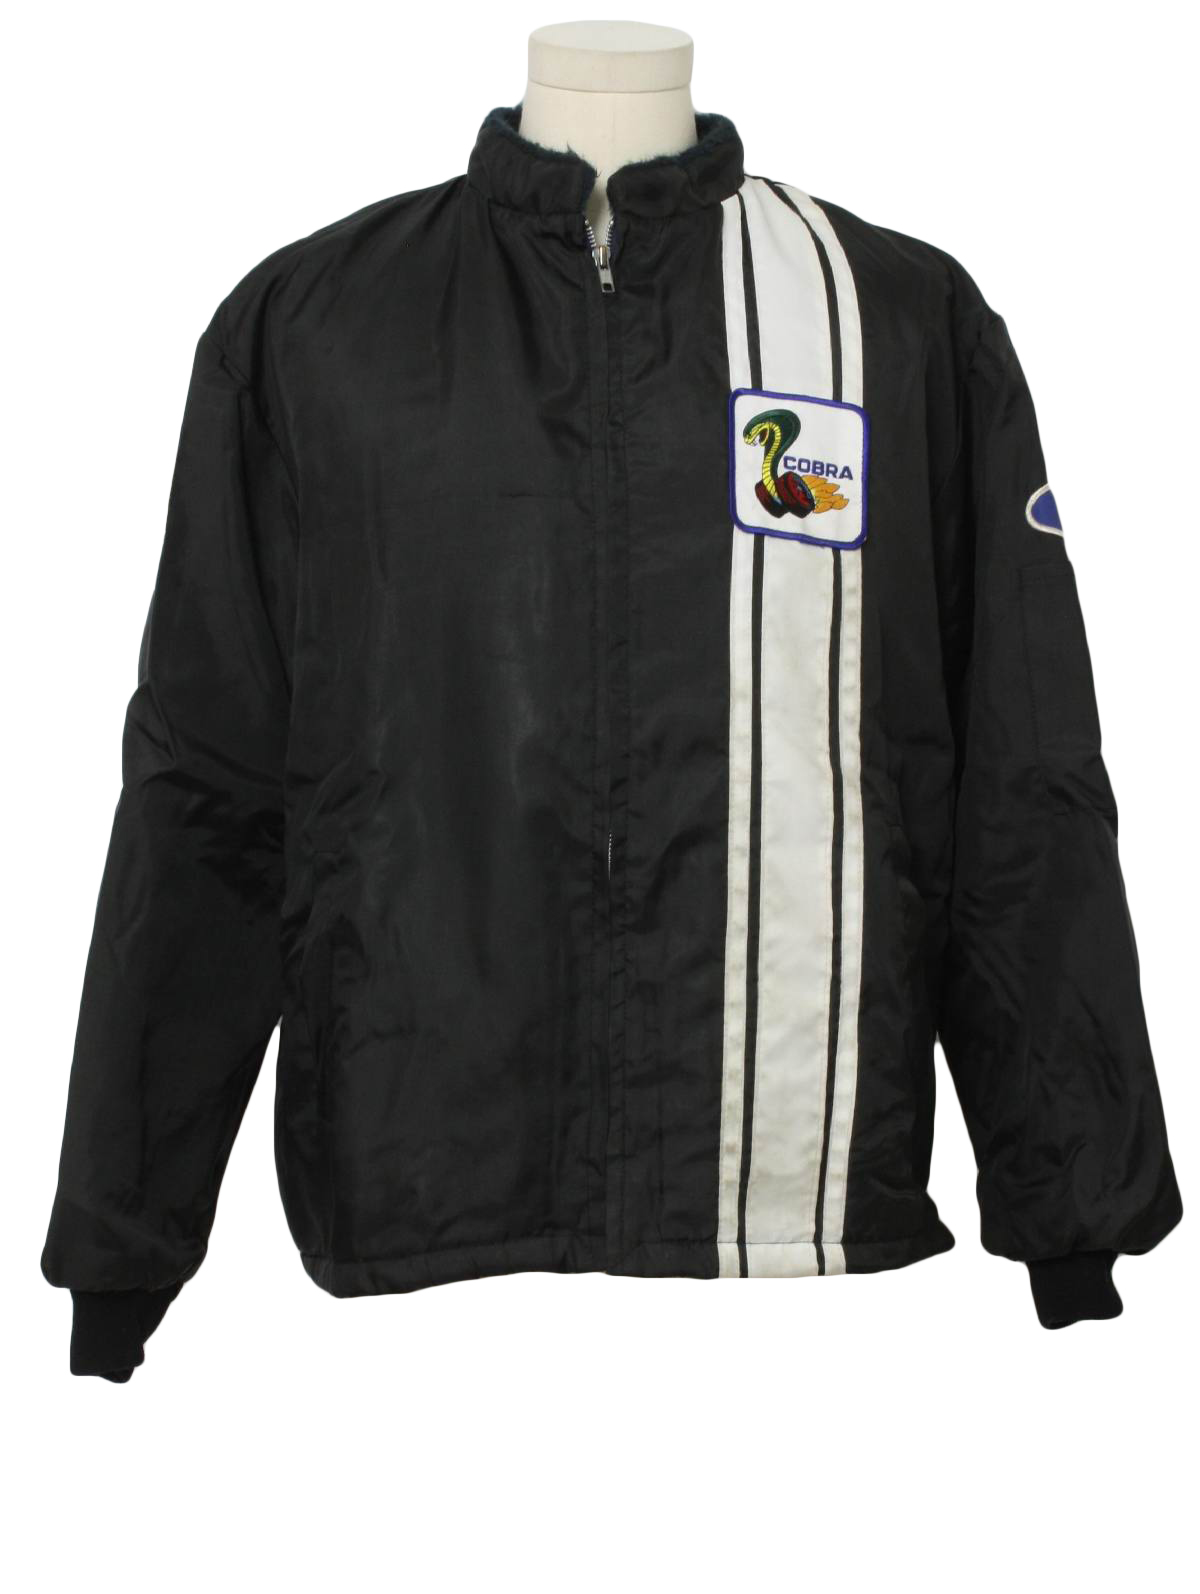 Ford cobra racing jacket #8